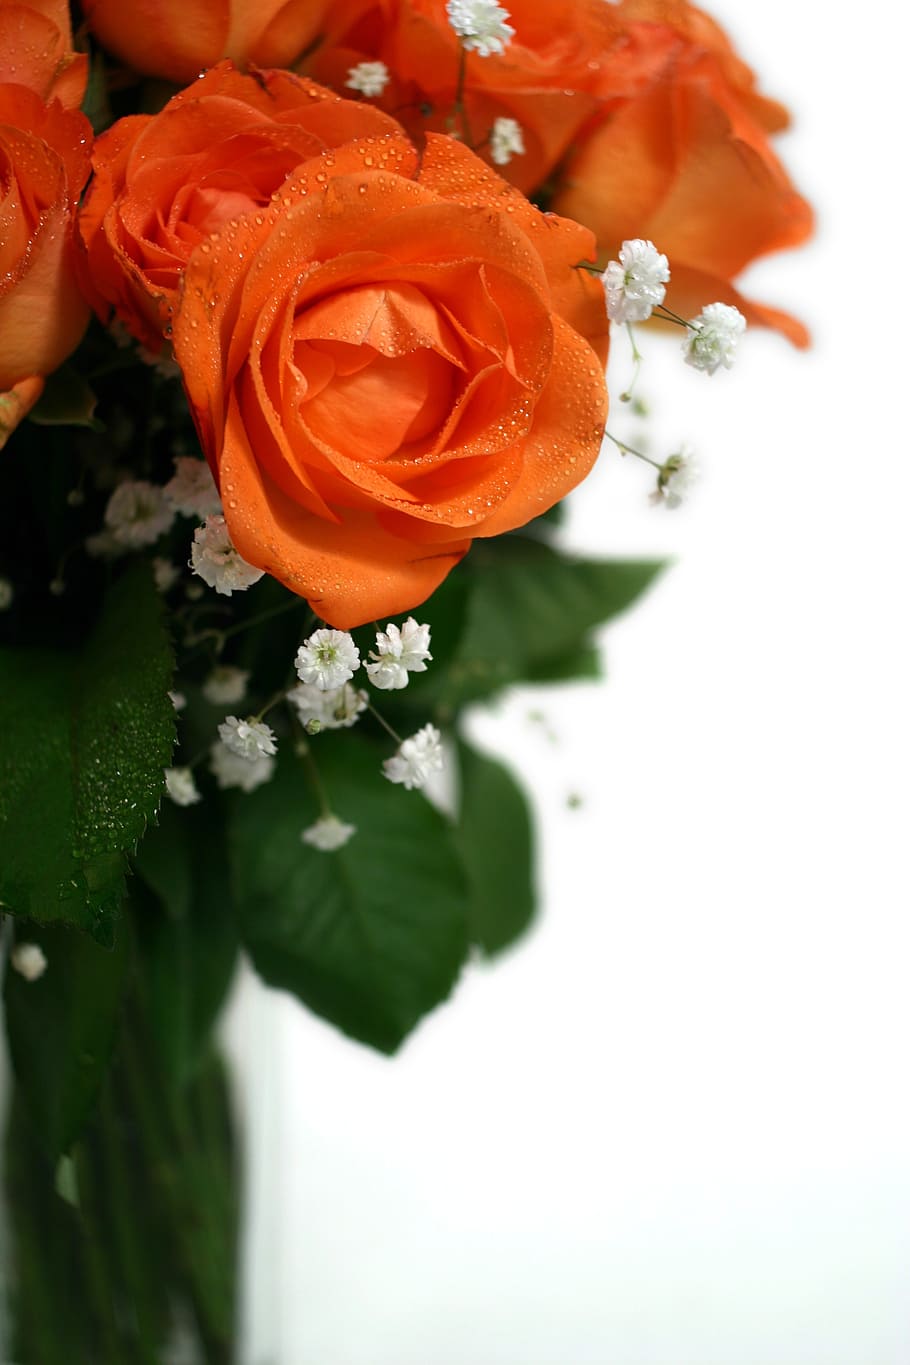 roses, bouquet, wedding, strauss, congratulations, bouquet of roses, rose - Flower, flower, nature, love